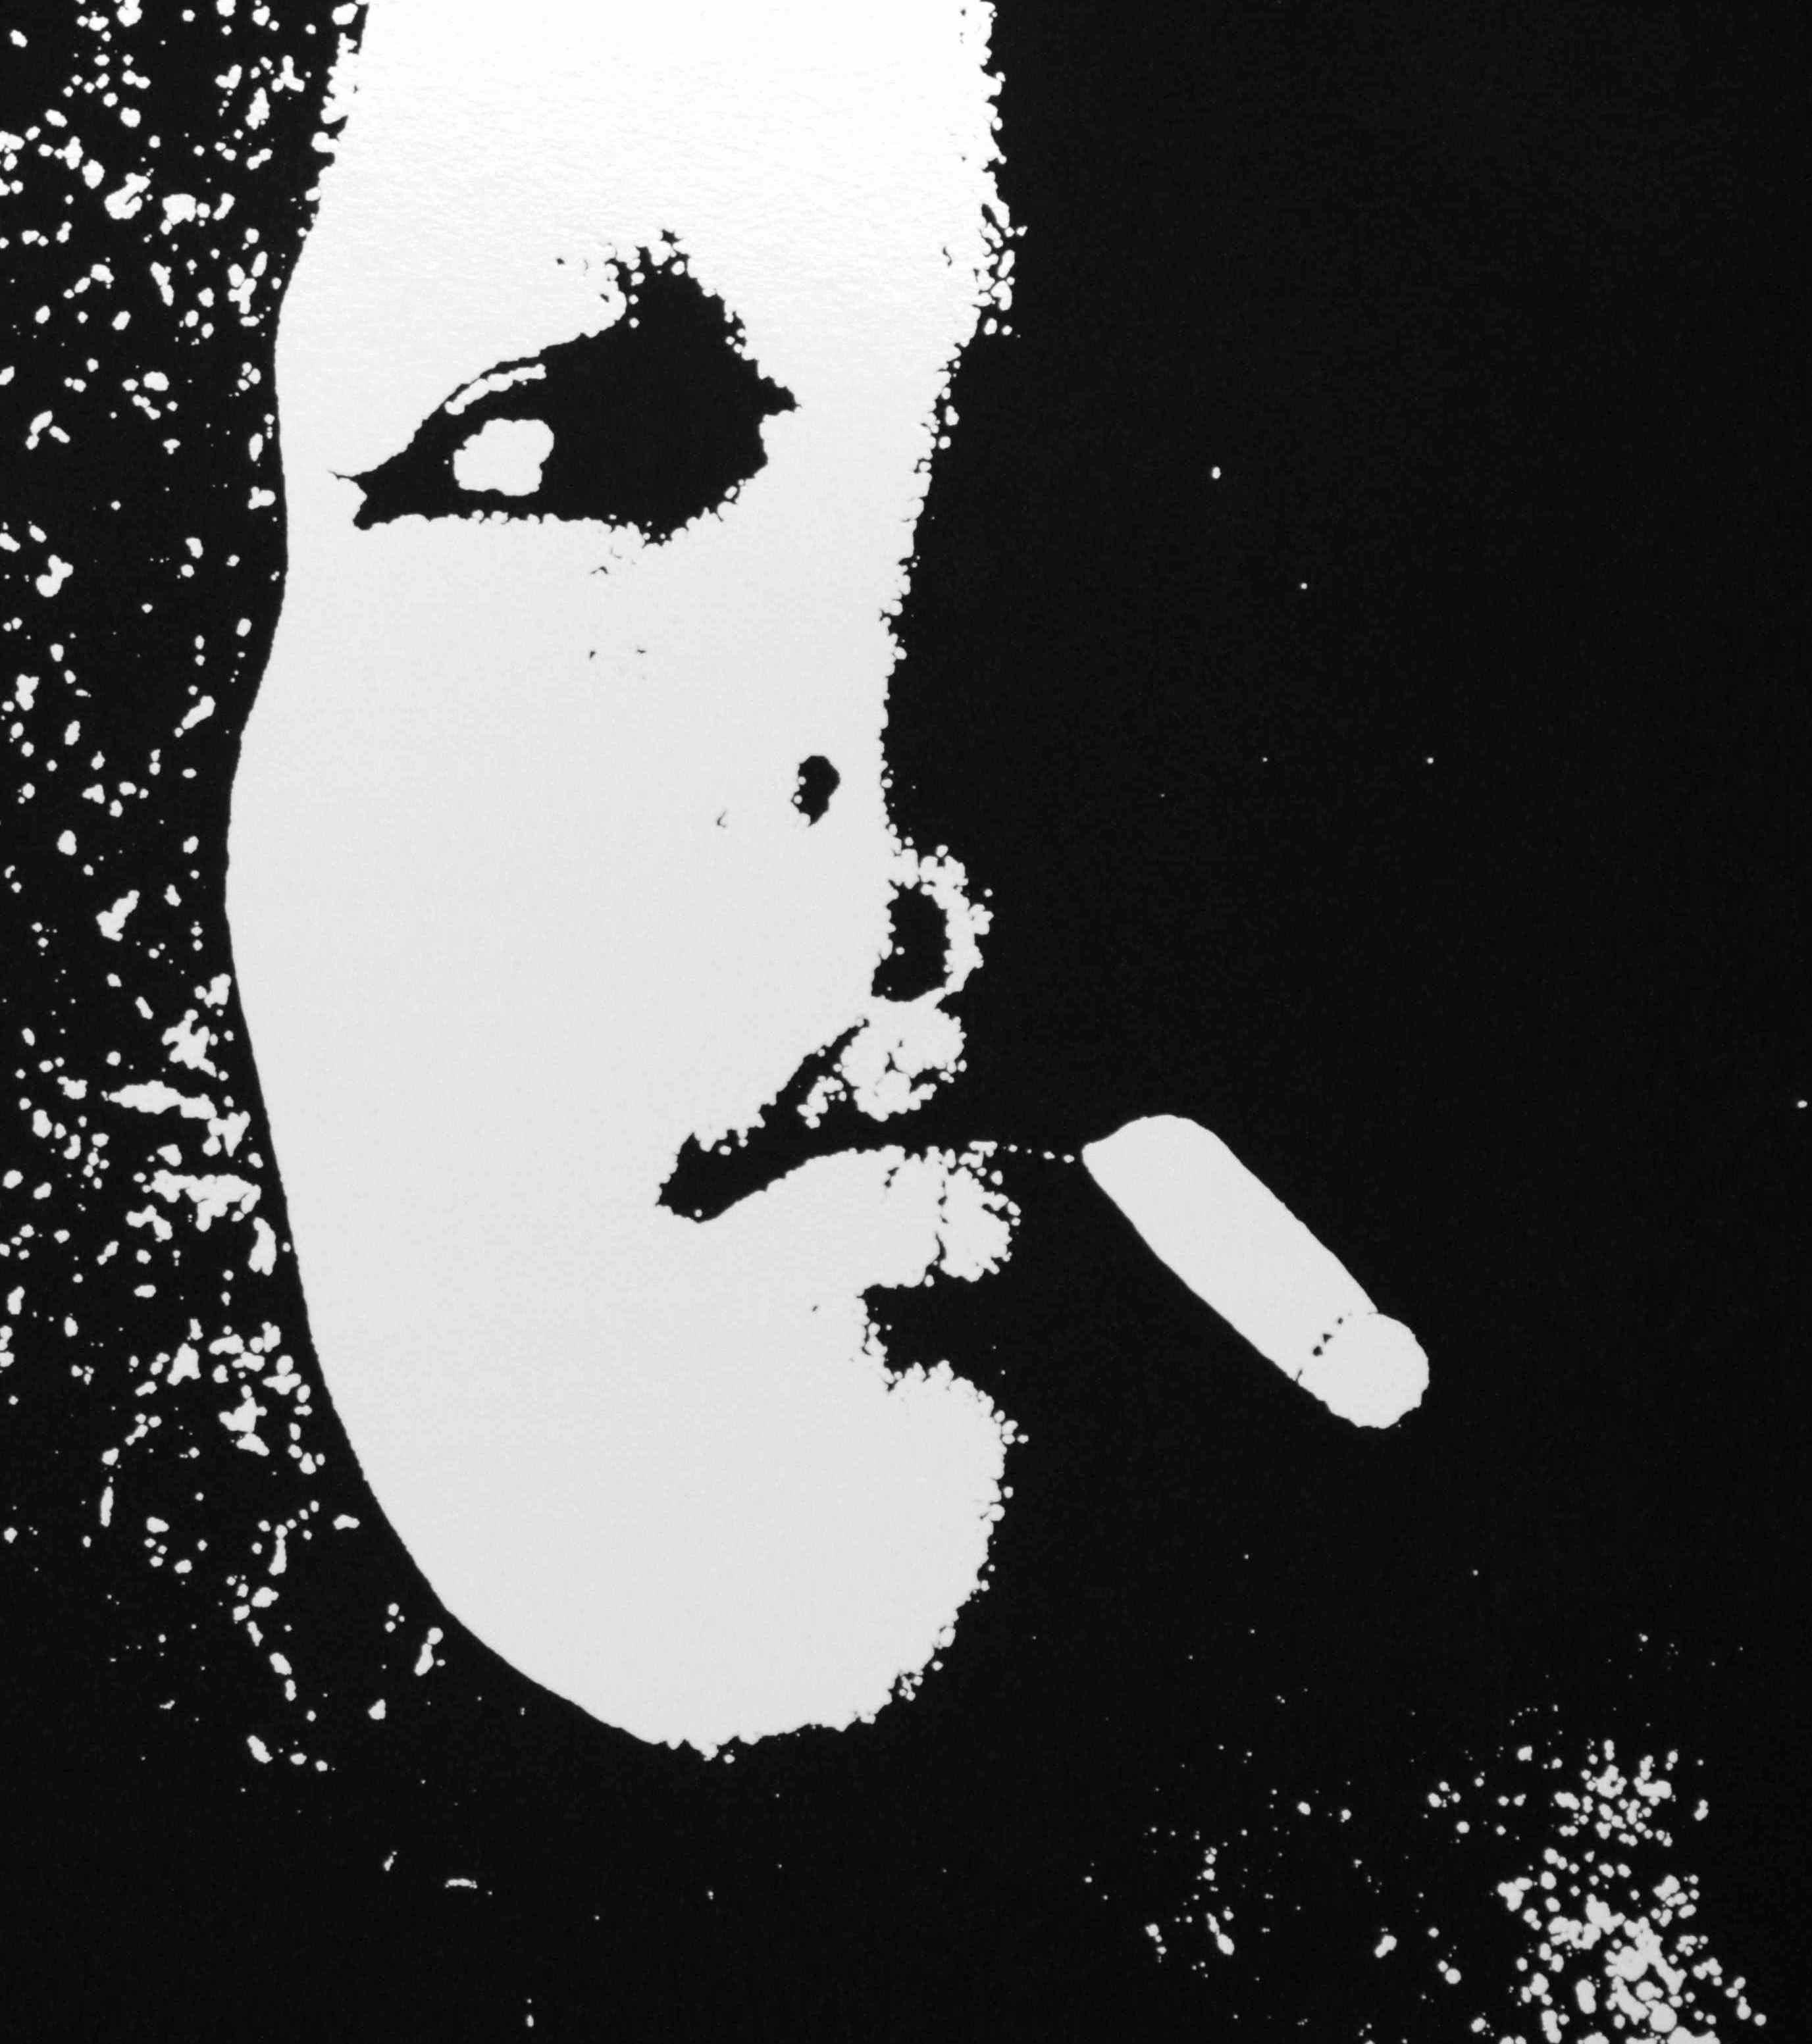 Smoker in Black - Original Etching by Giacomo Porzano - 1972 For Sale 3